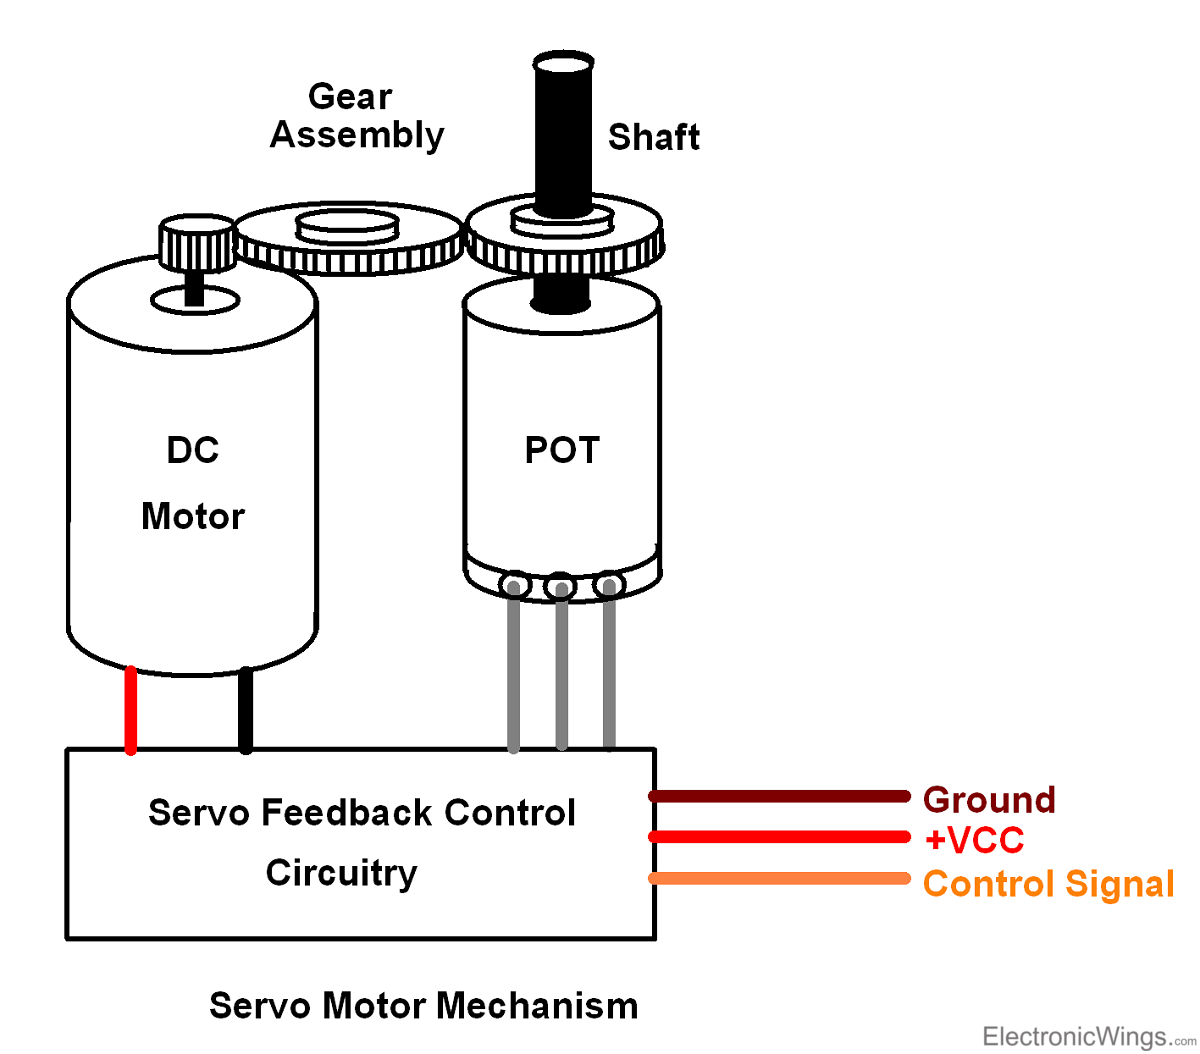 Servo Motor Mechanism